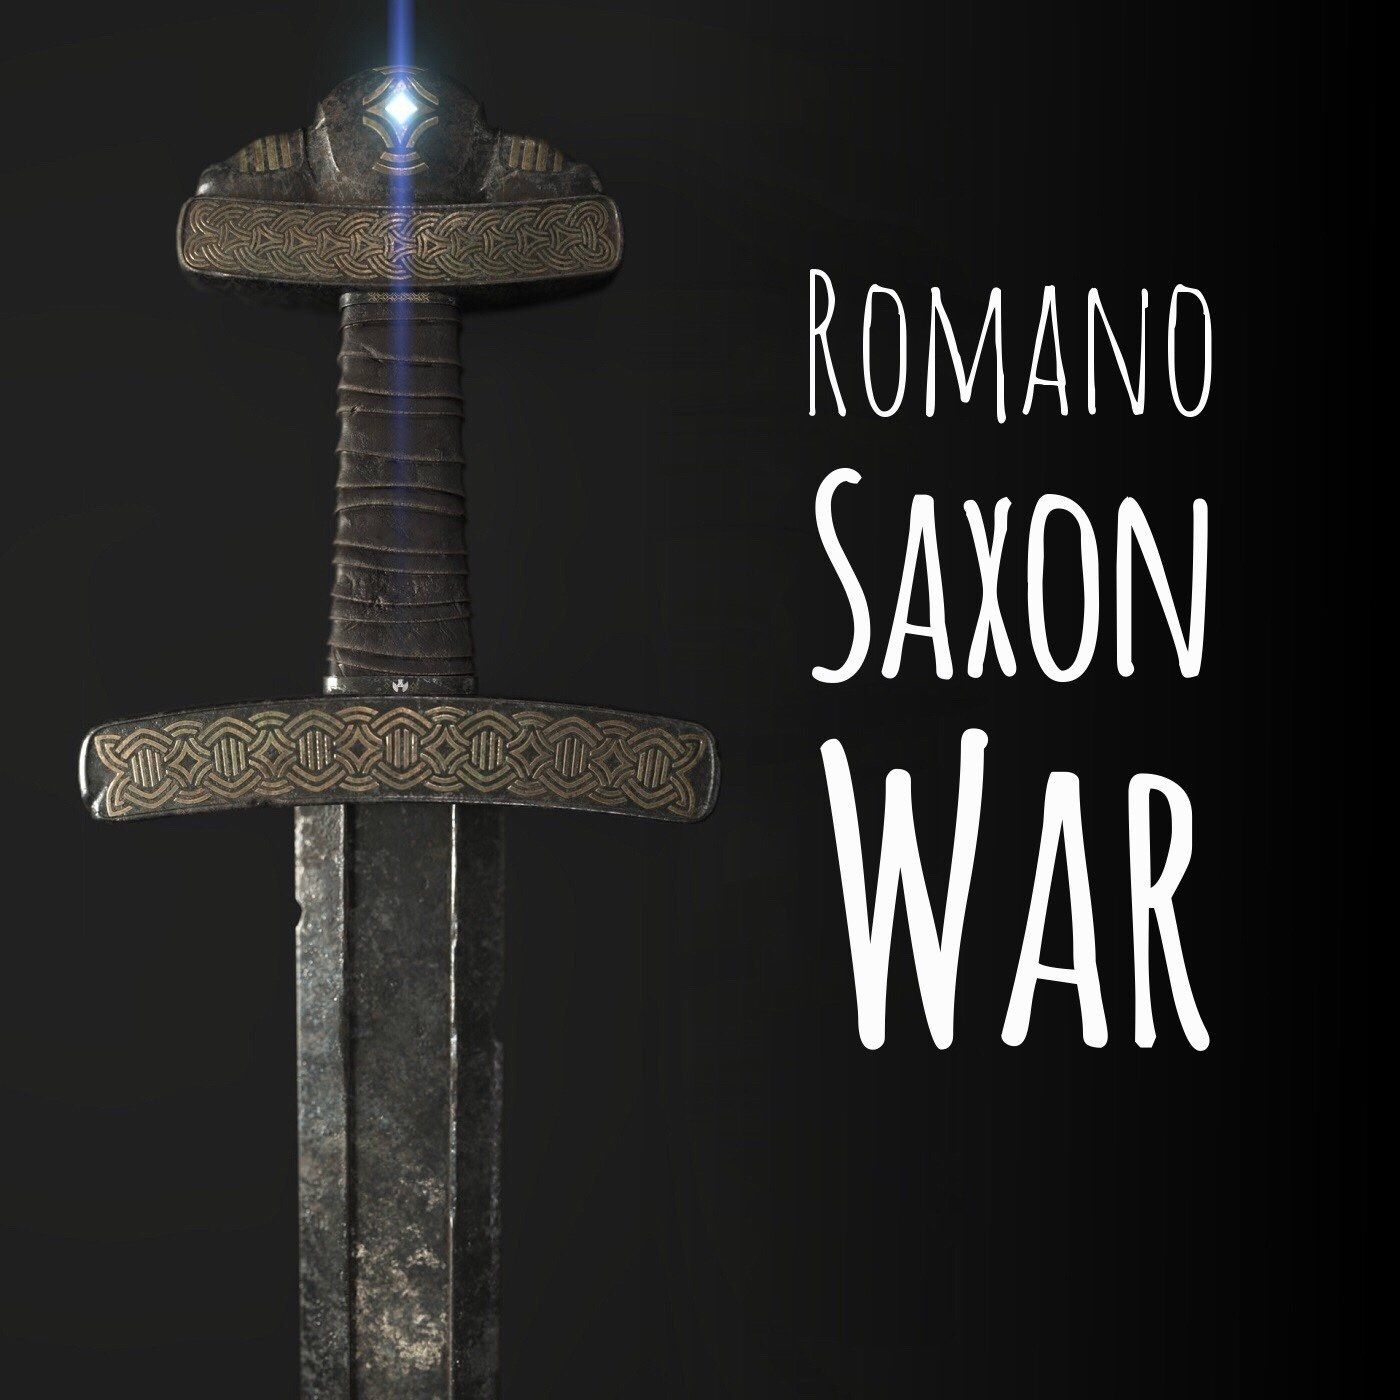 Romano Saxon War, Part 4